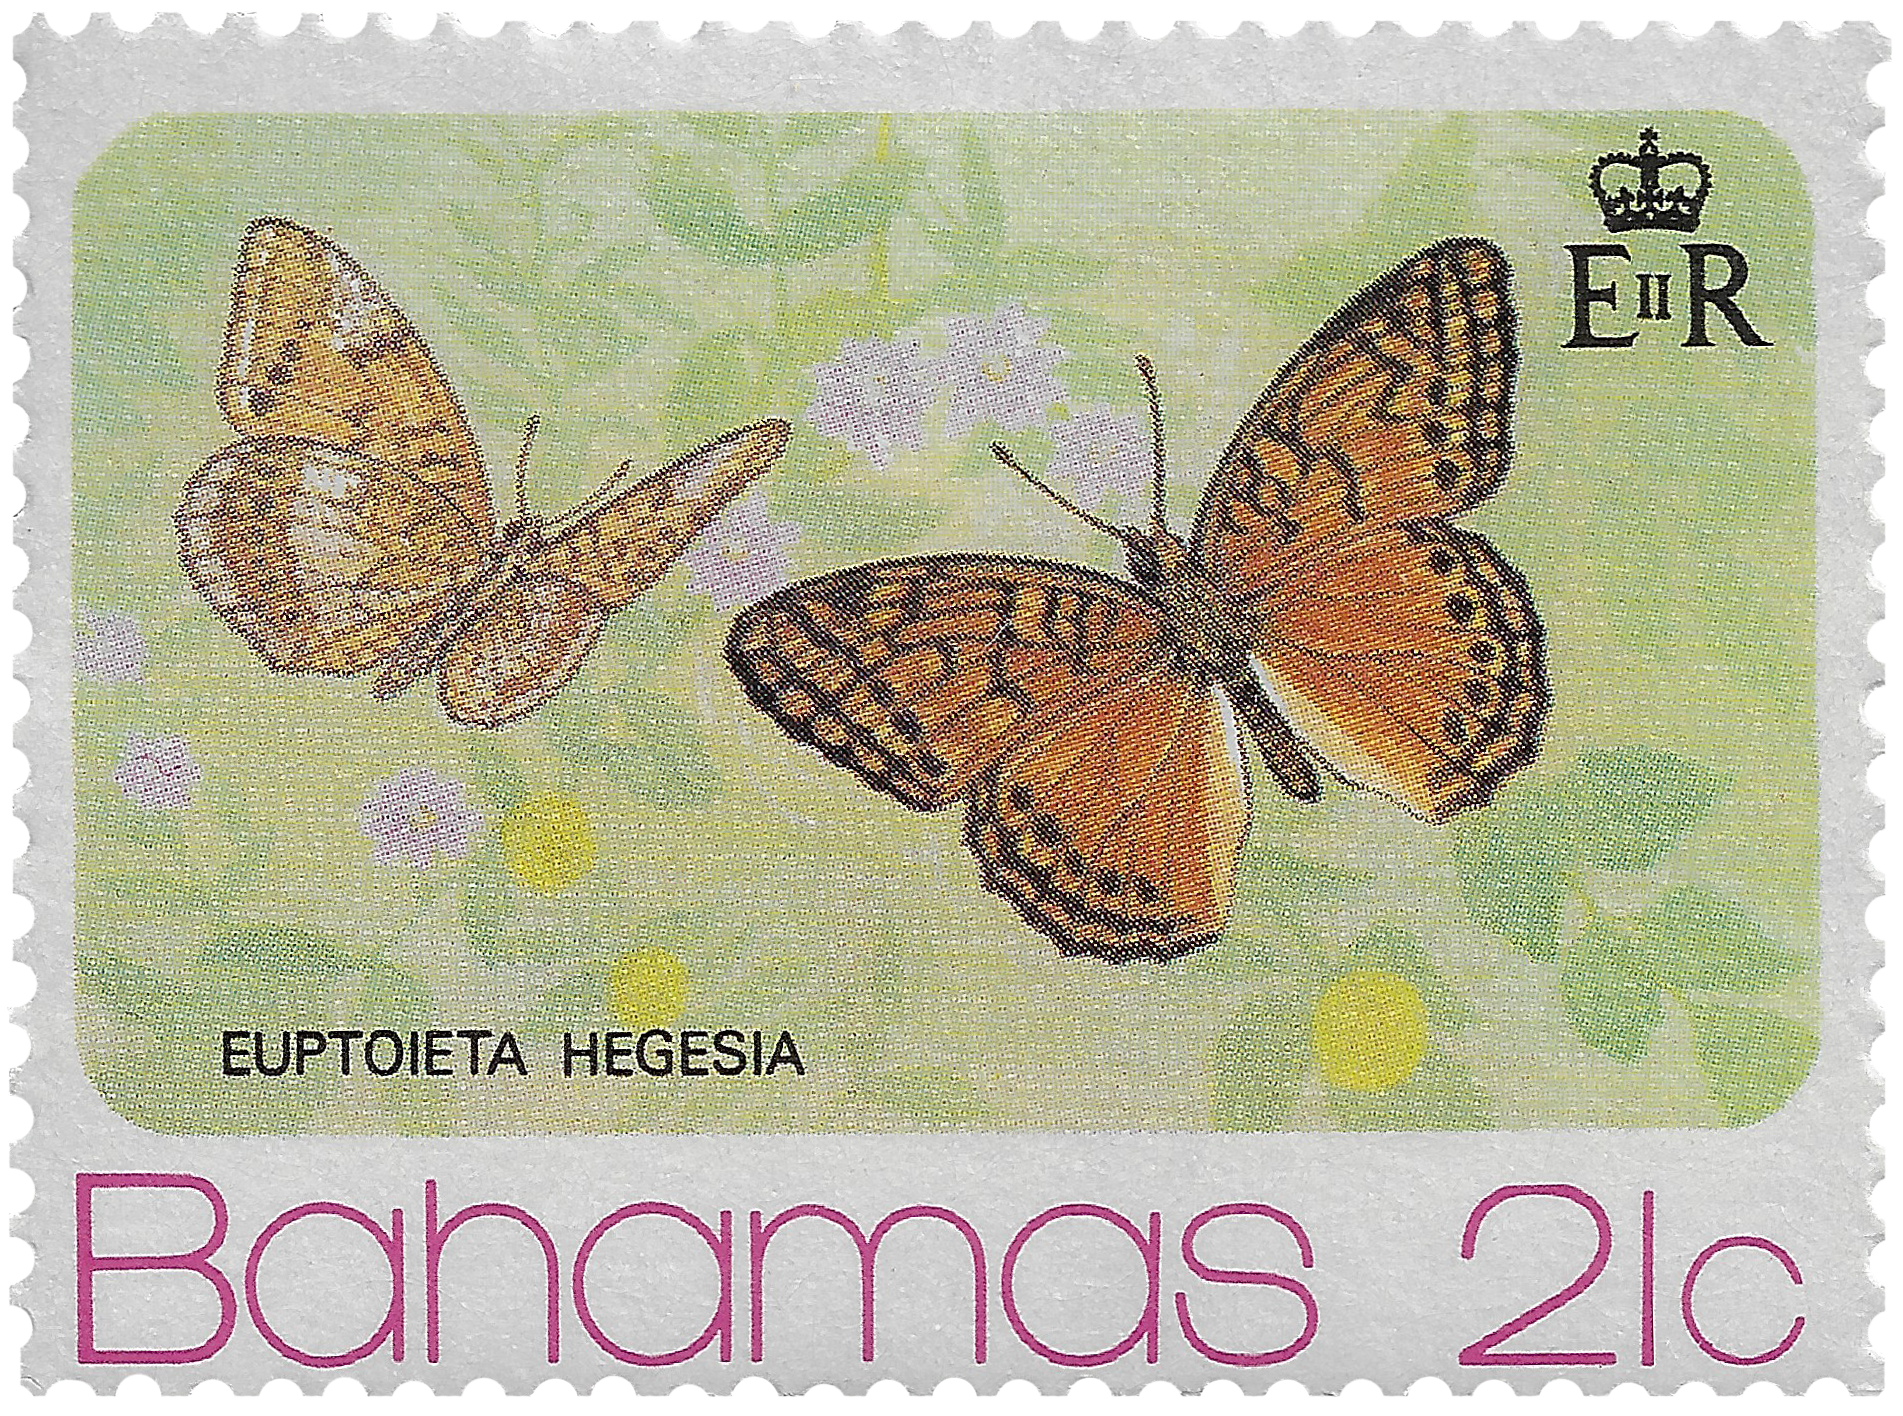 21c 1975, Euptoieta Hegesia, Butterfly